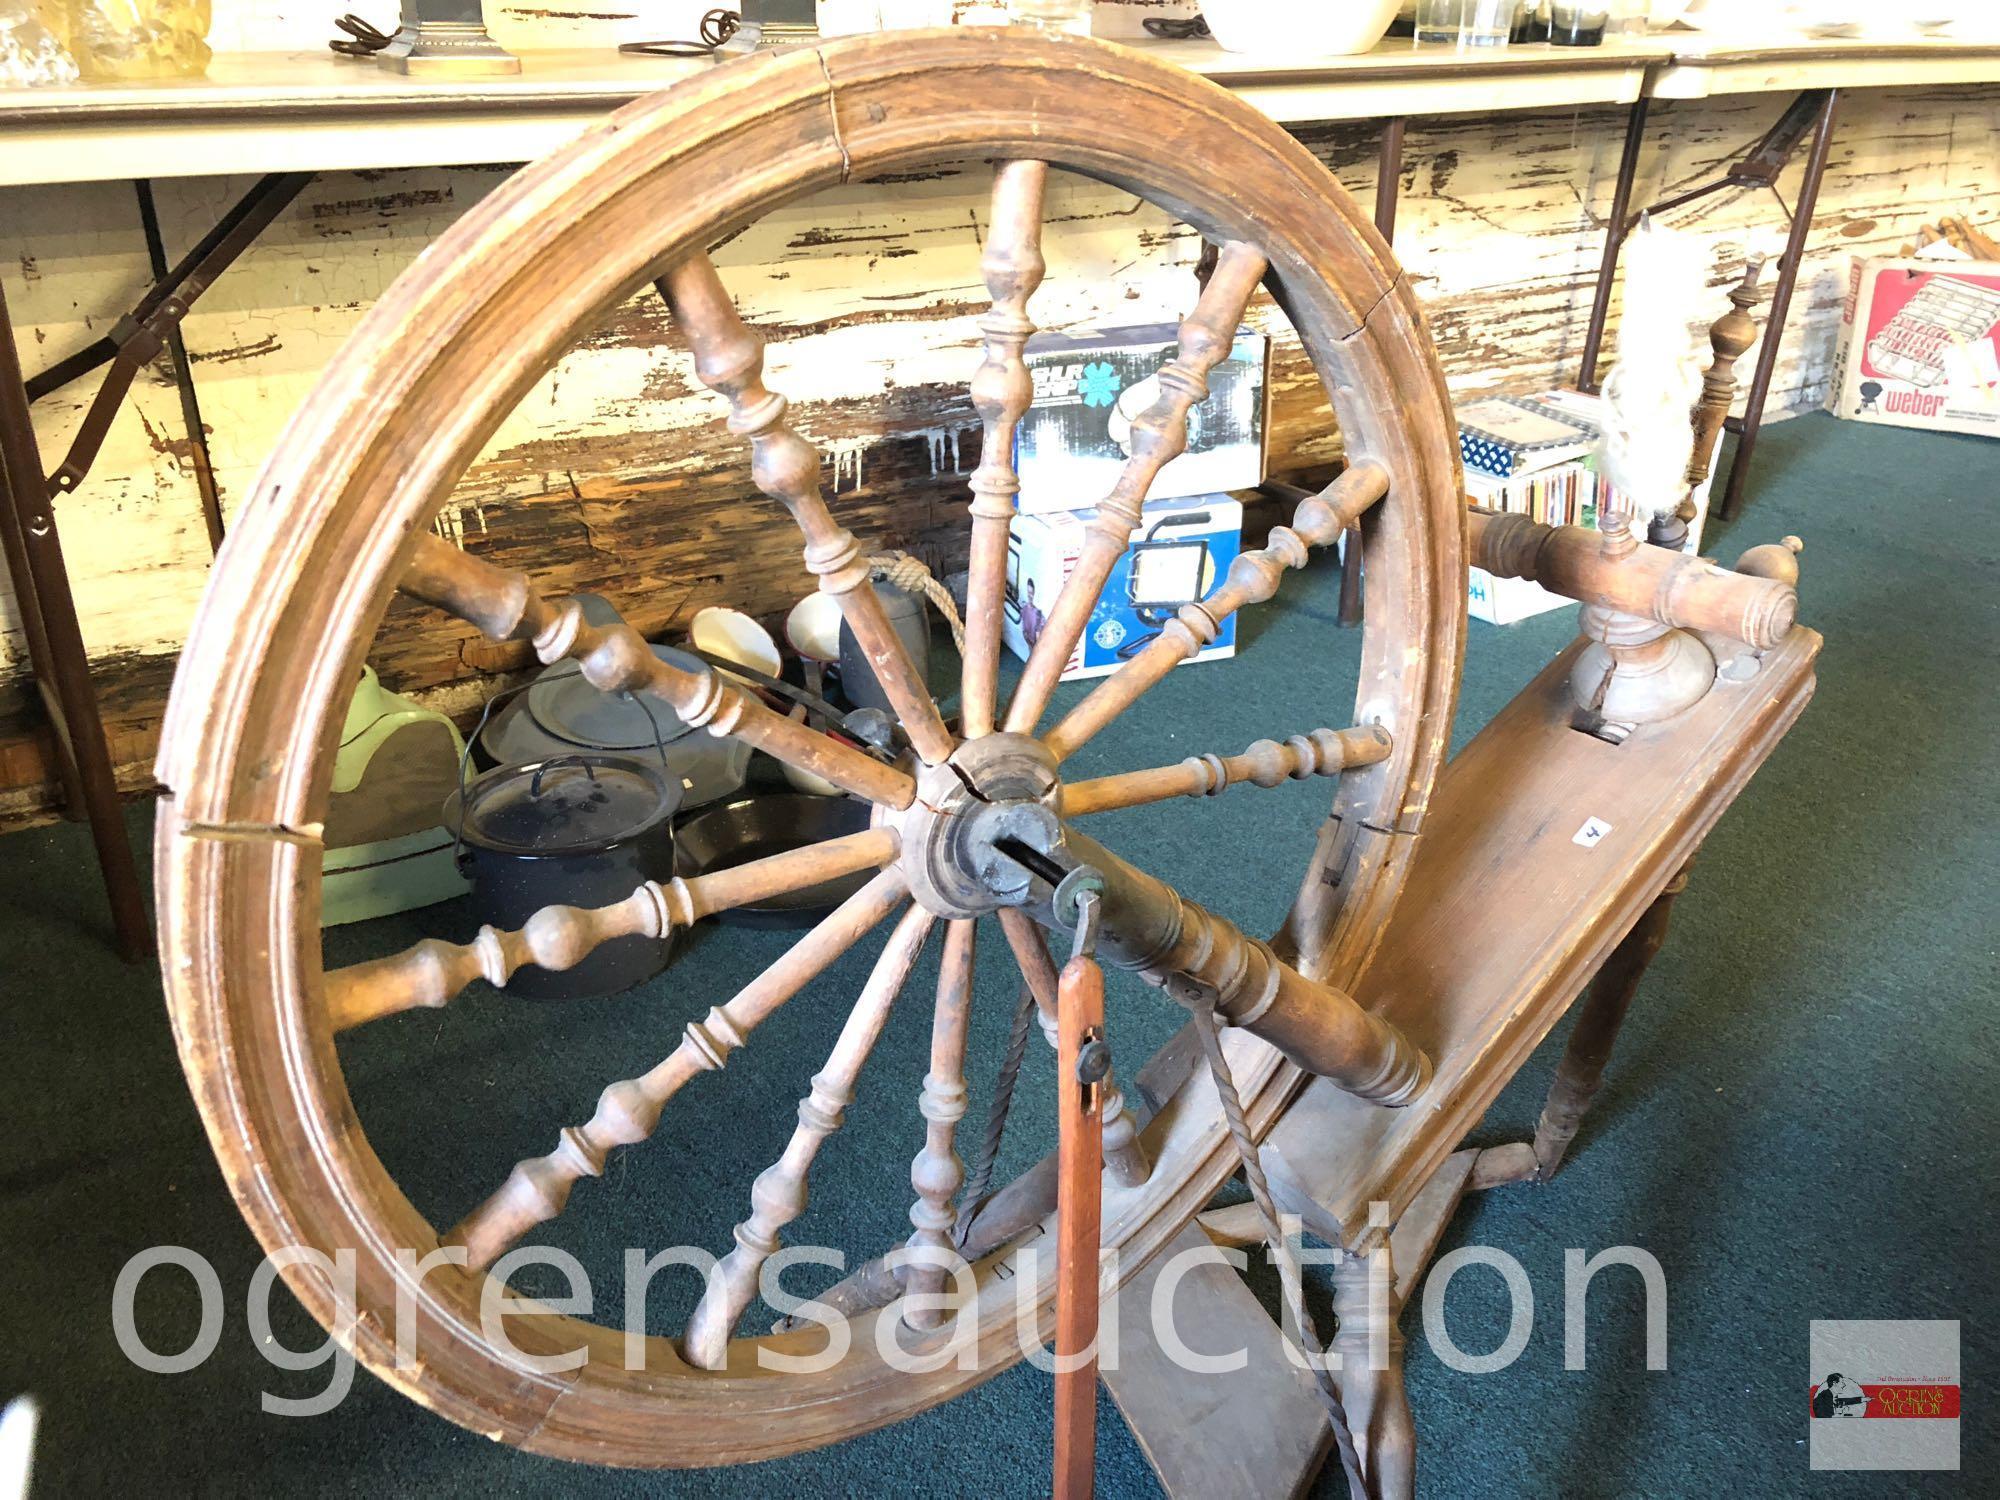 Vintage spinning wheel, needs some TLC